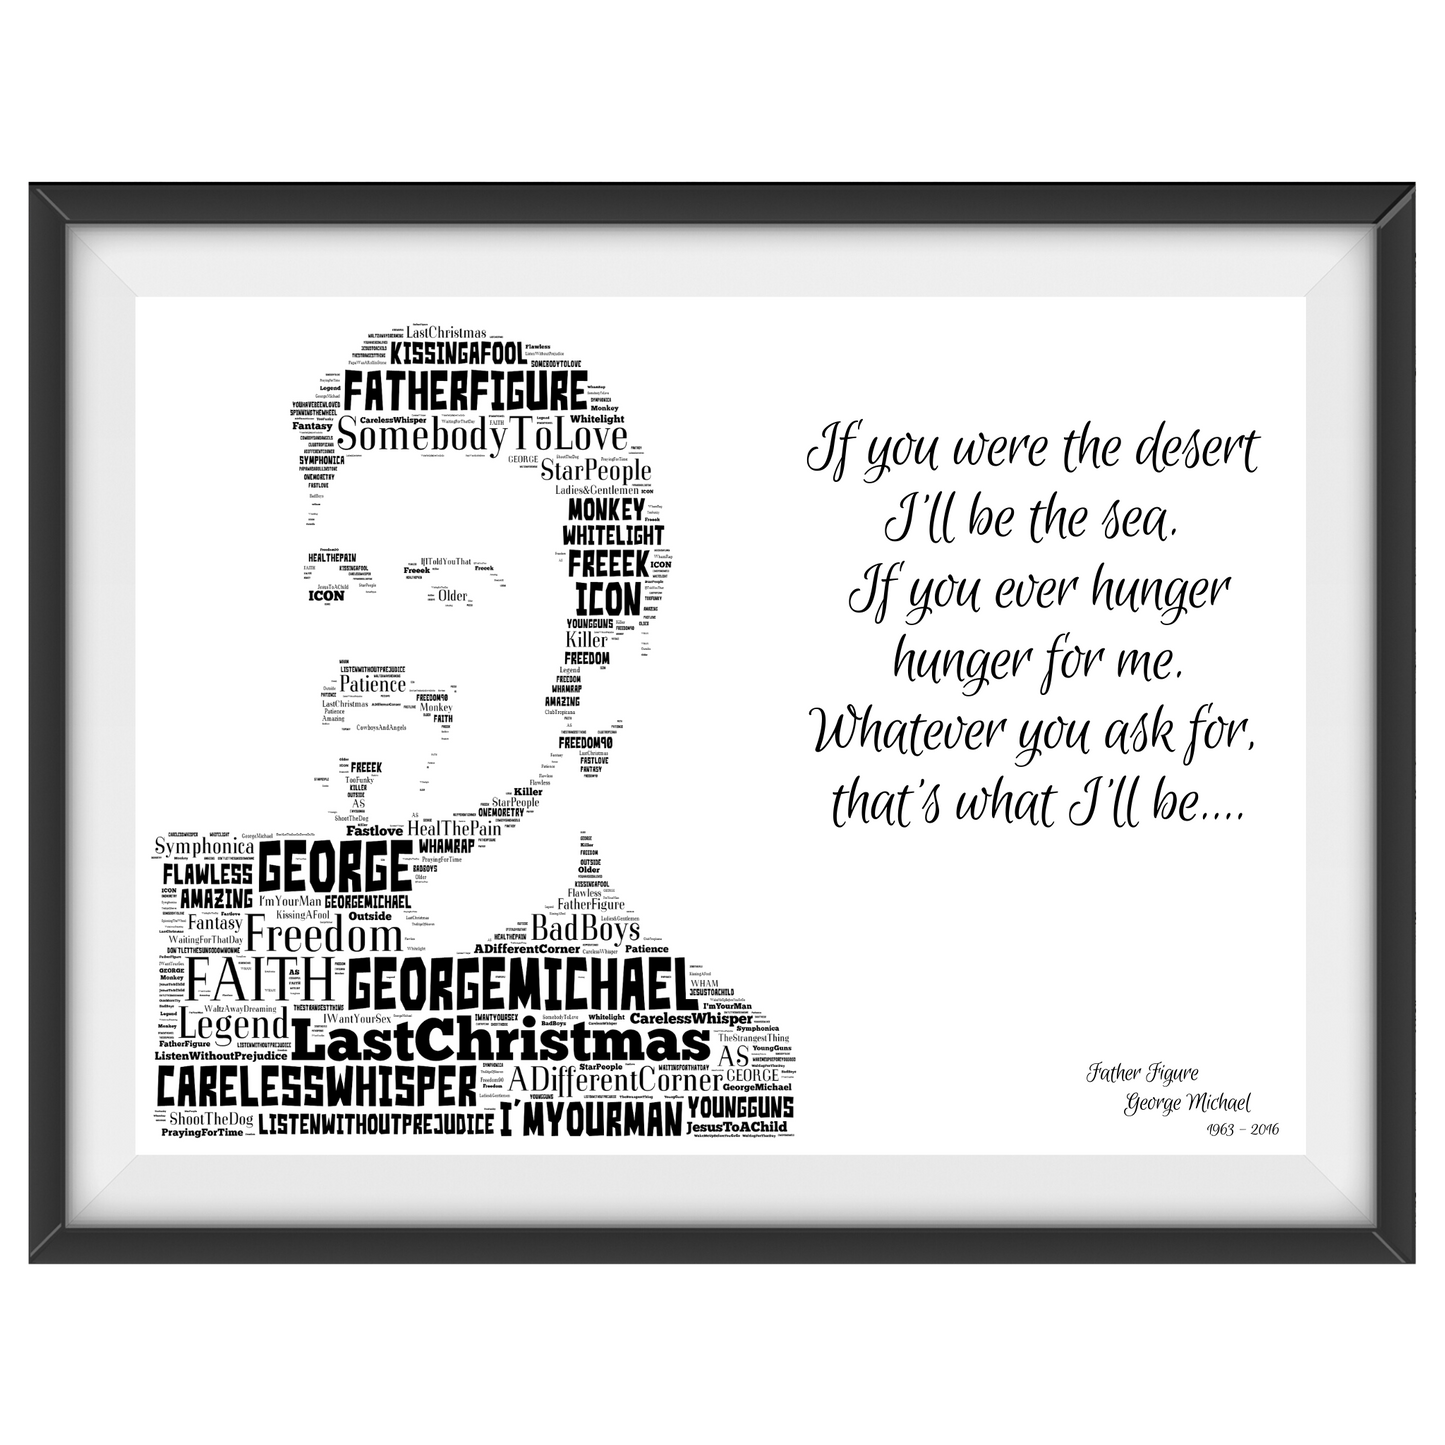 George Michael v2 Typography Portrait in songs & lyrics print